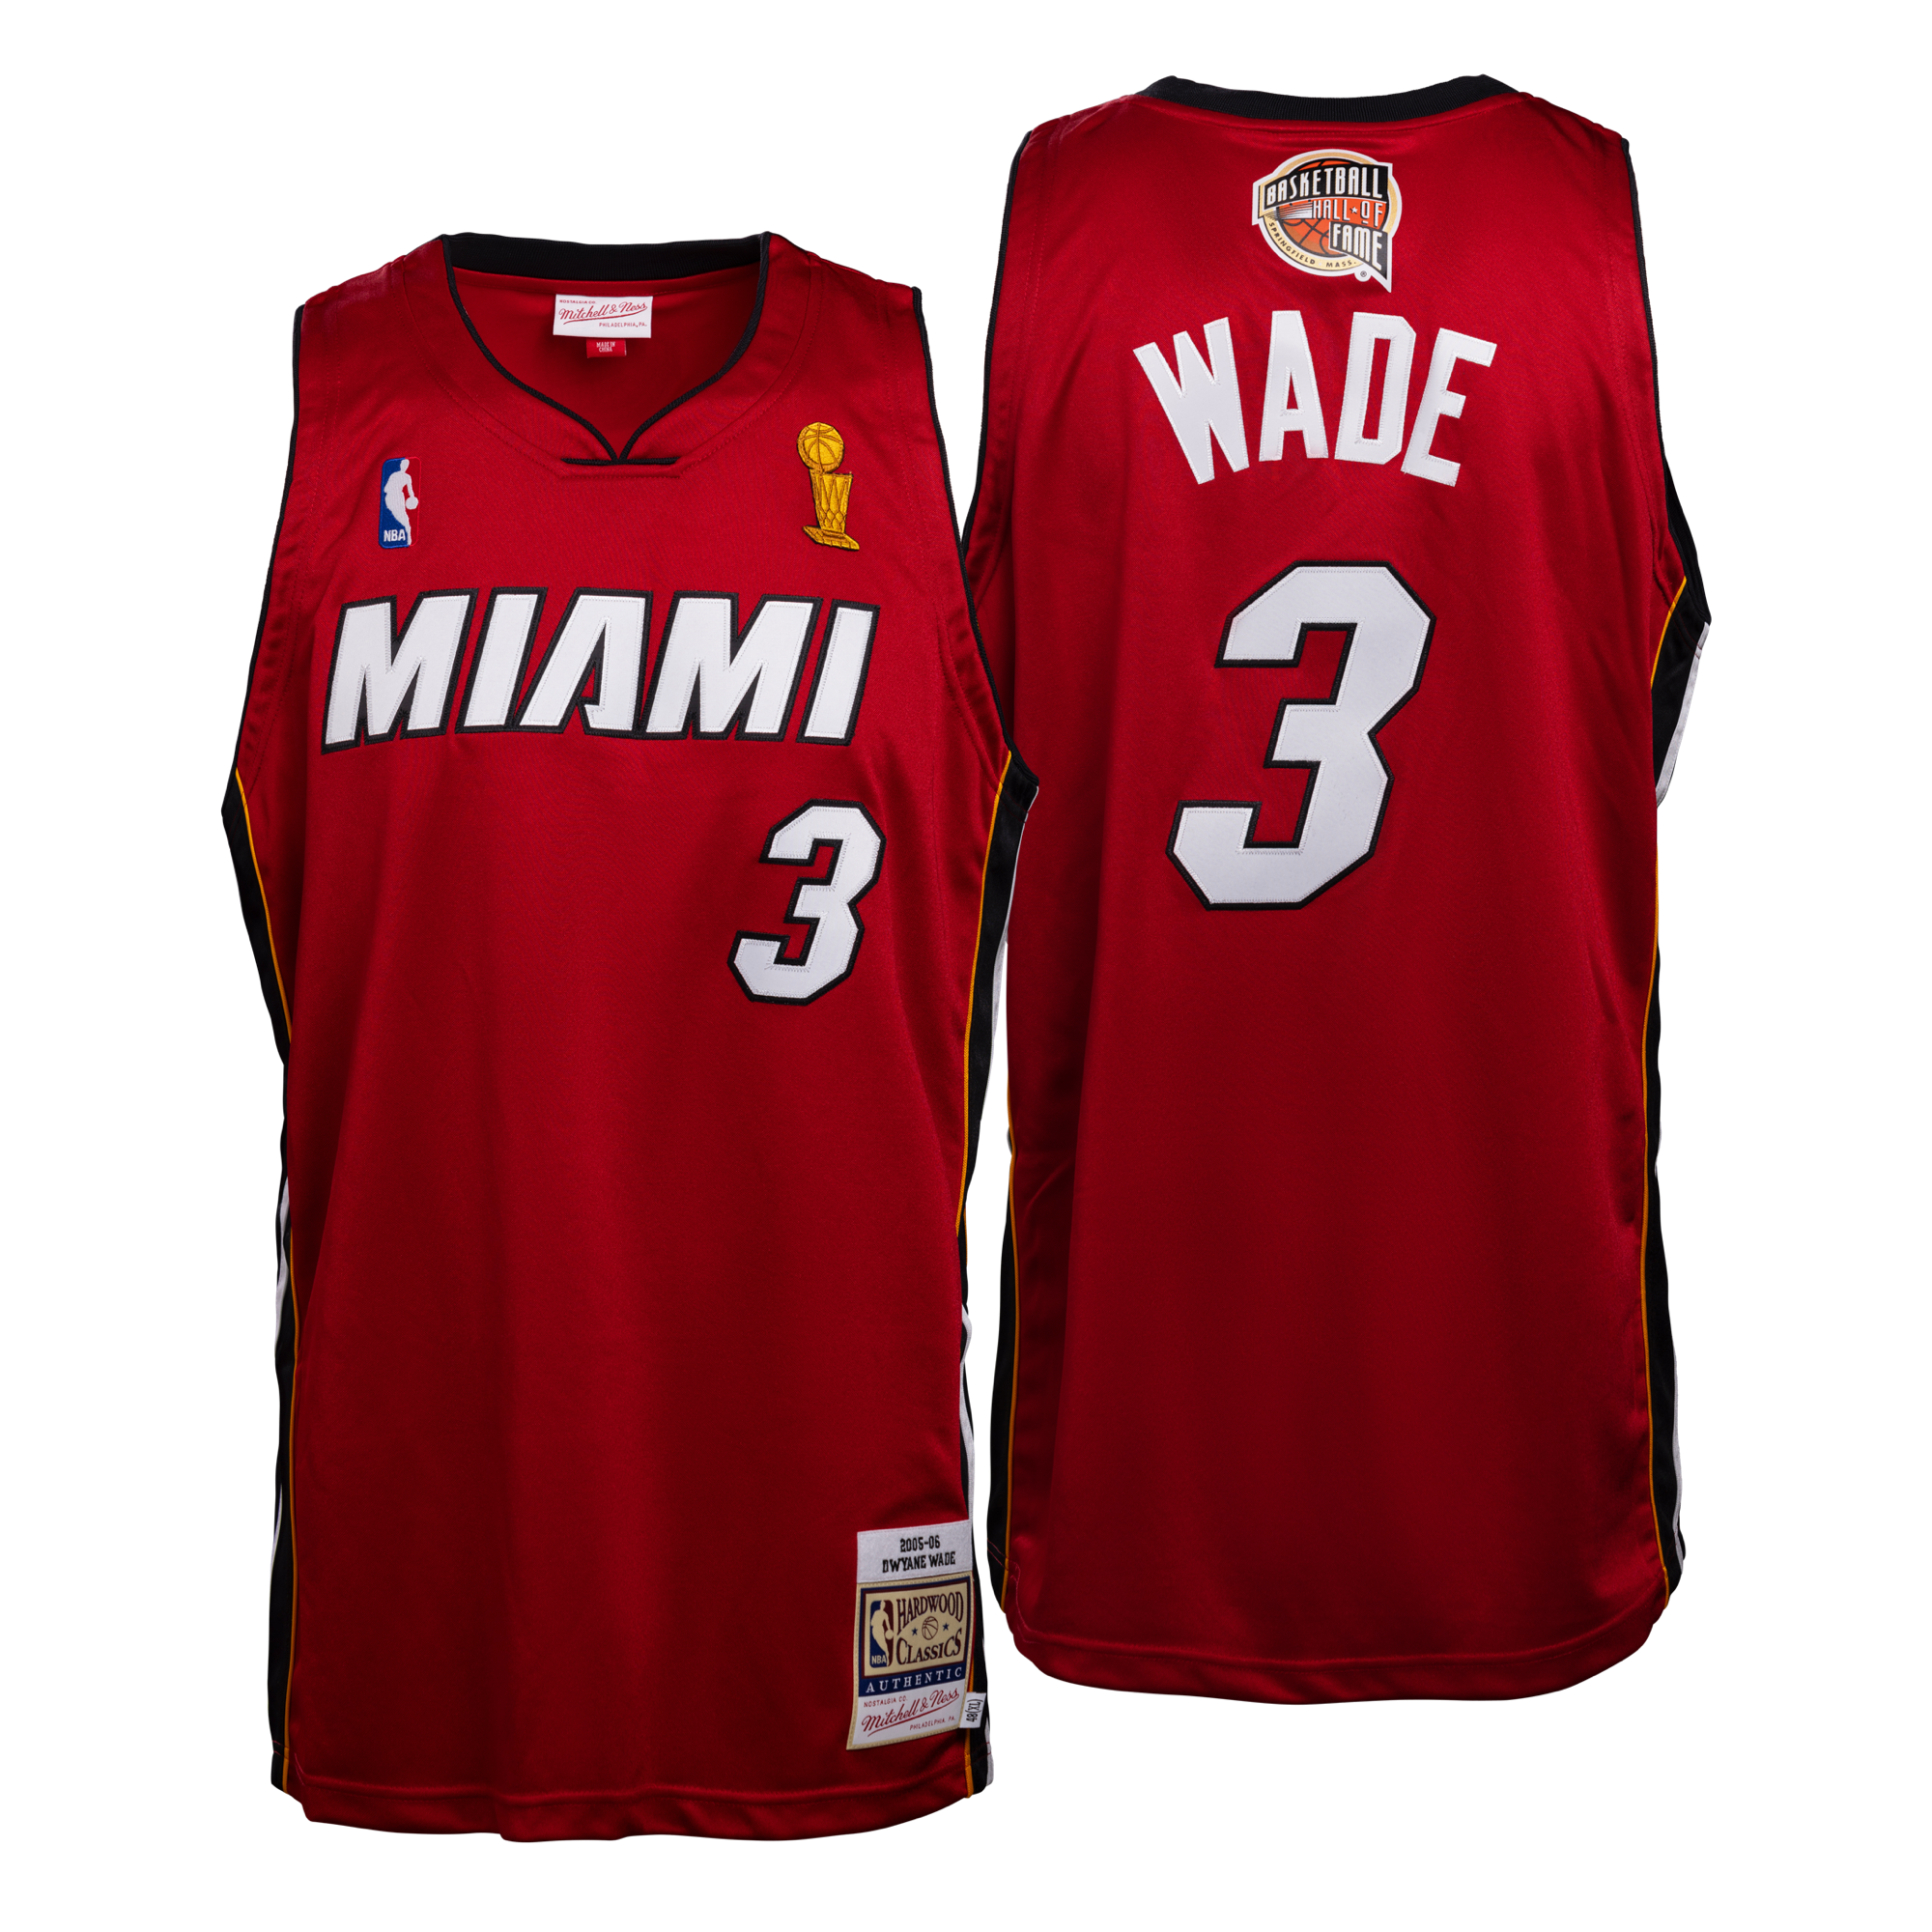 2005-2006 Dwayne Wade NBA Finals Game Worn Jersey